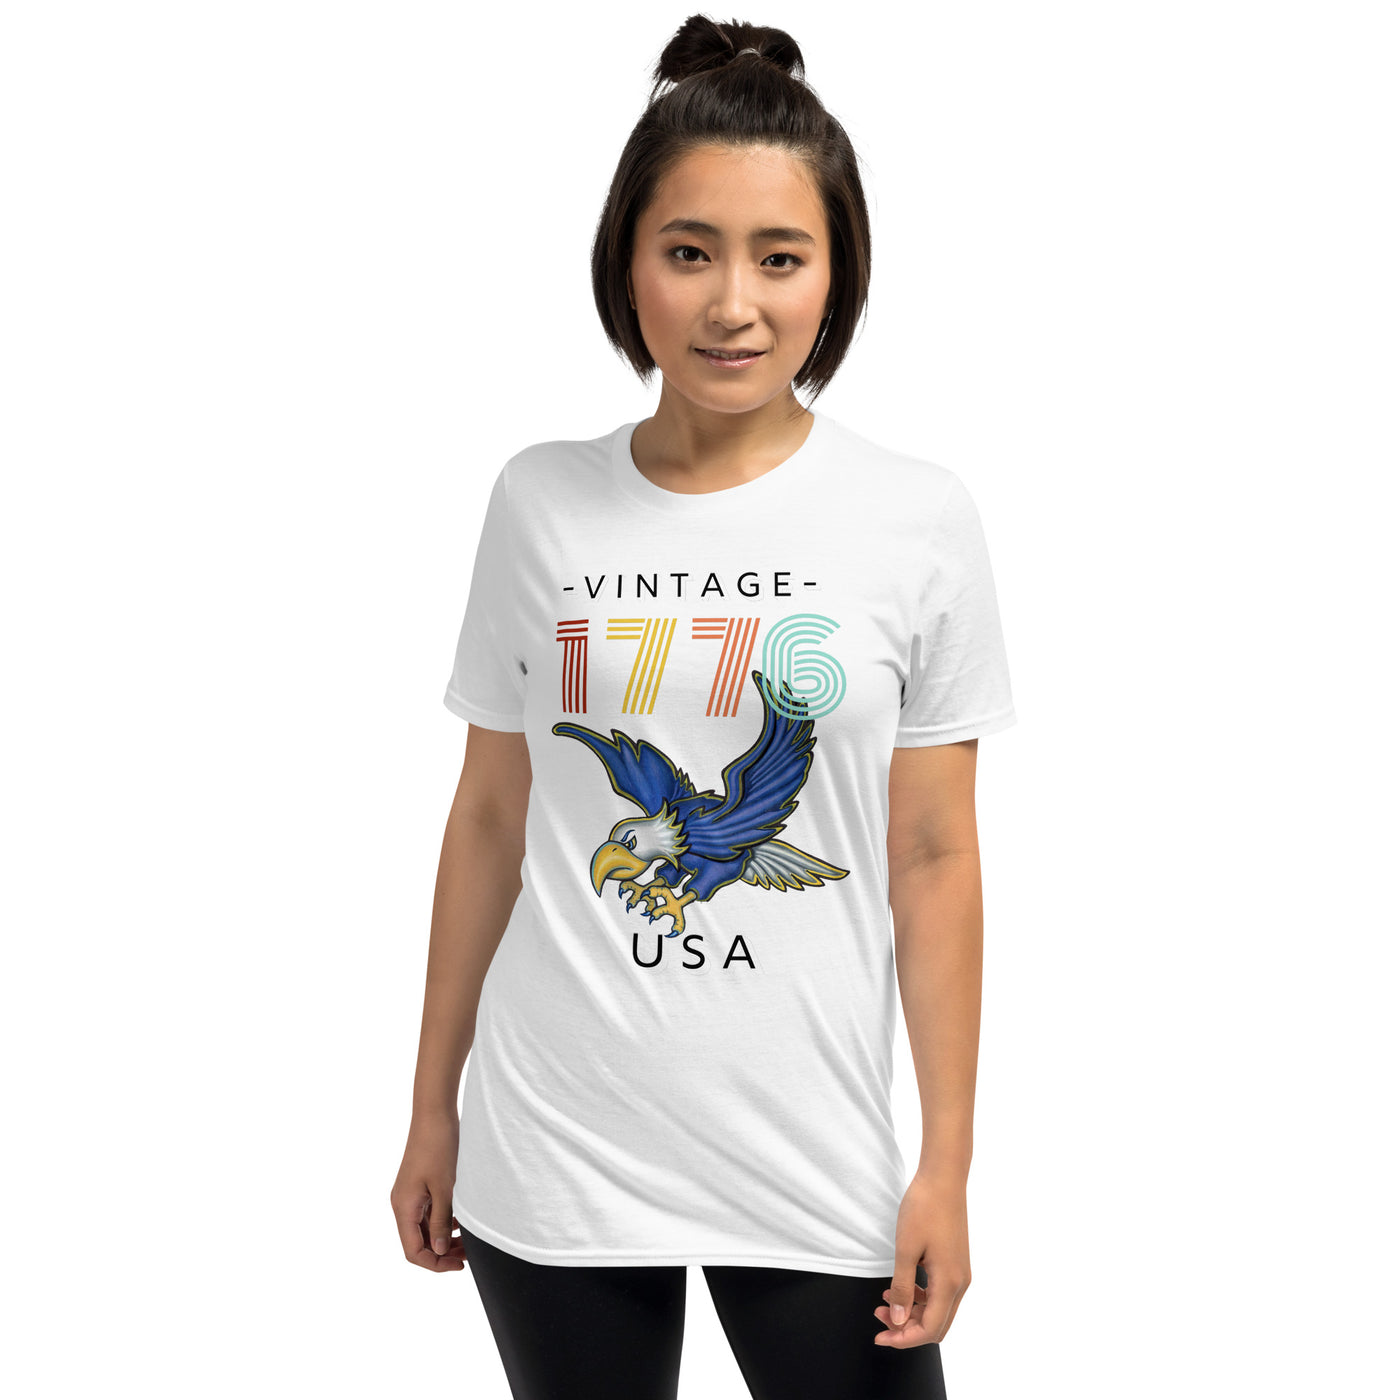 Vintage USA Unisex T-Shirt